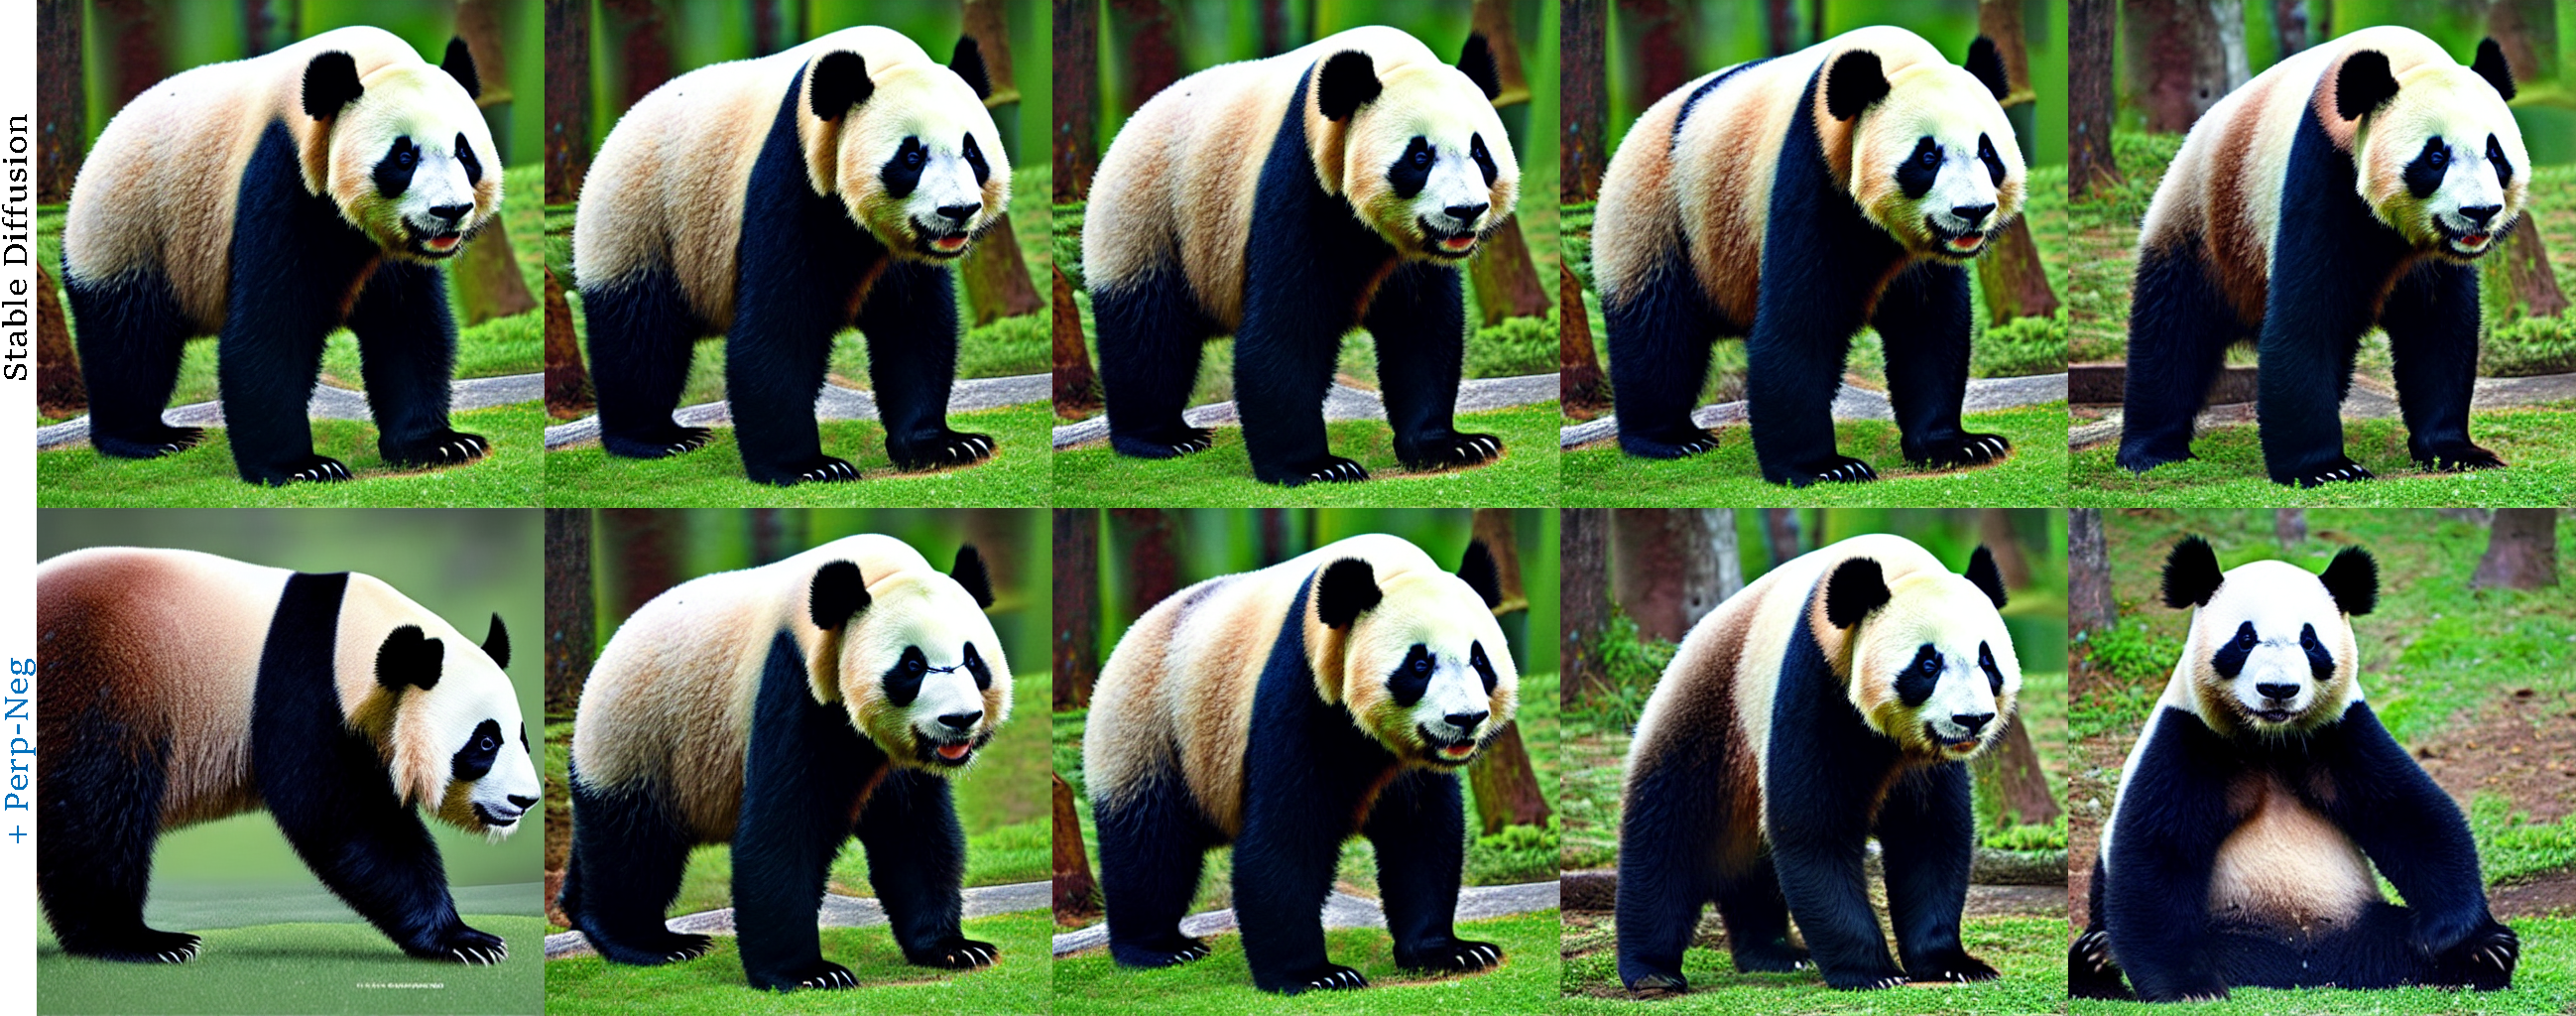 2d-view-interpolation-panda.